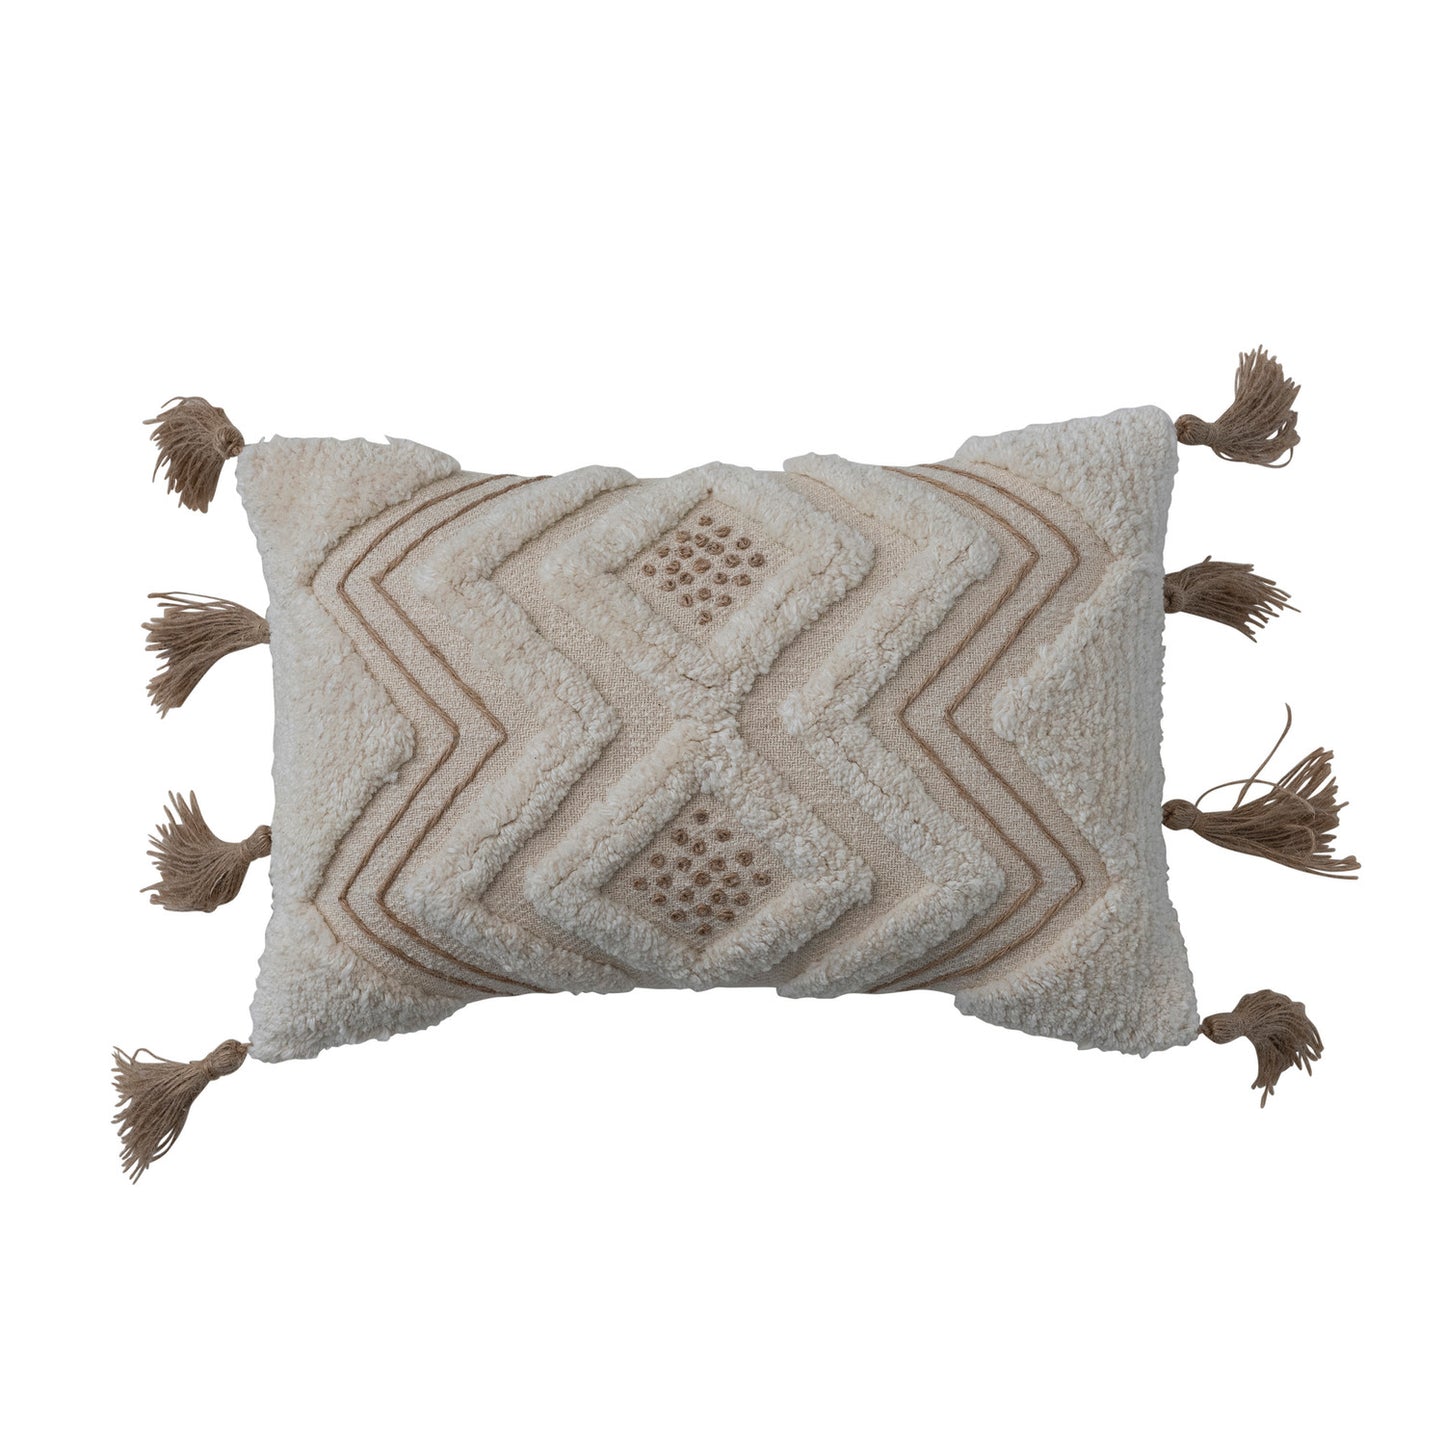 14"L x 9"H Cotton Slub Lumbar Pillow w/ Tufting, Embroidery & Jute Tassels, Natural